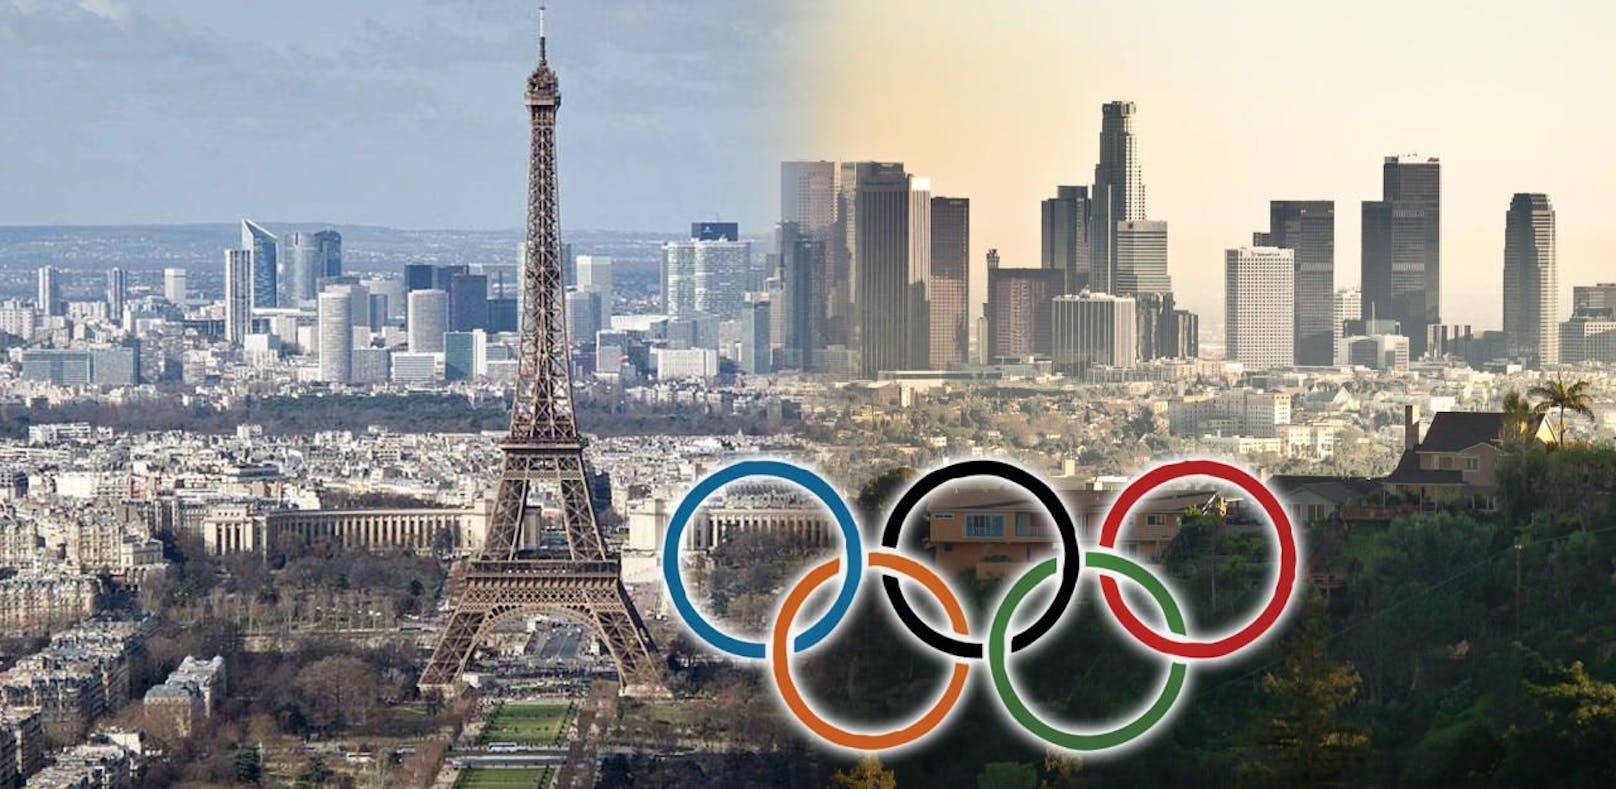 Fix! Olympia 2024 in Paris, 2028 in Los Angeles